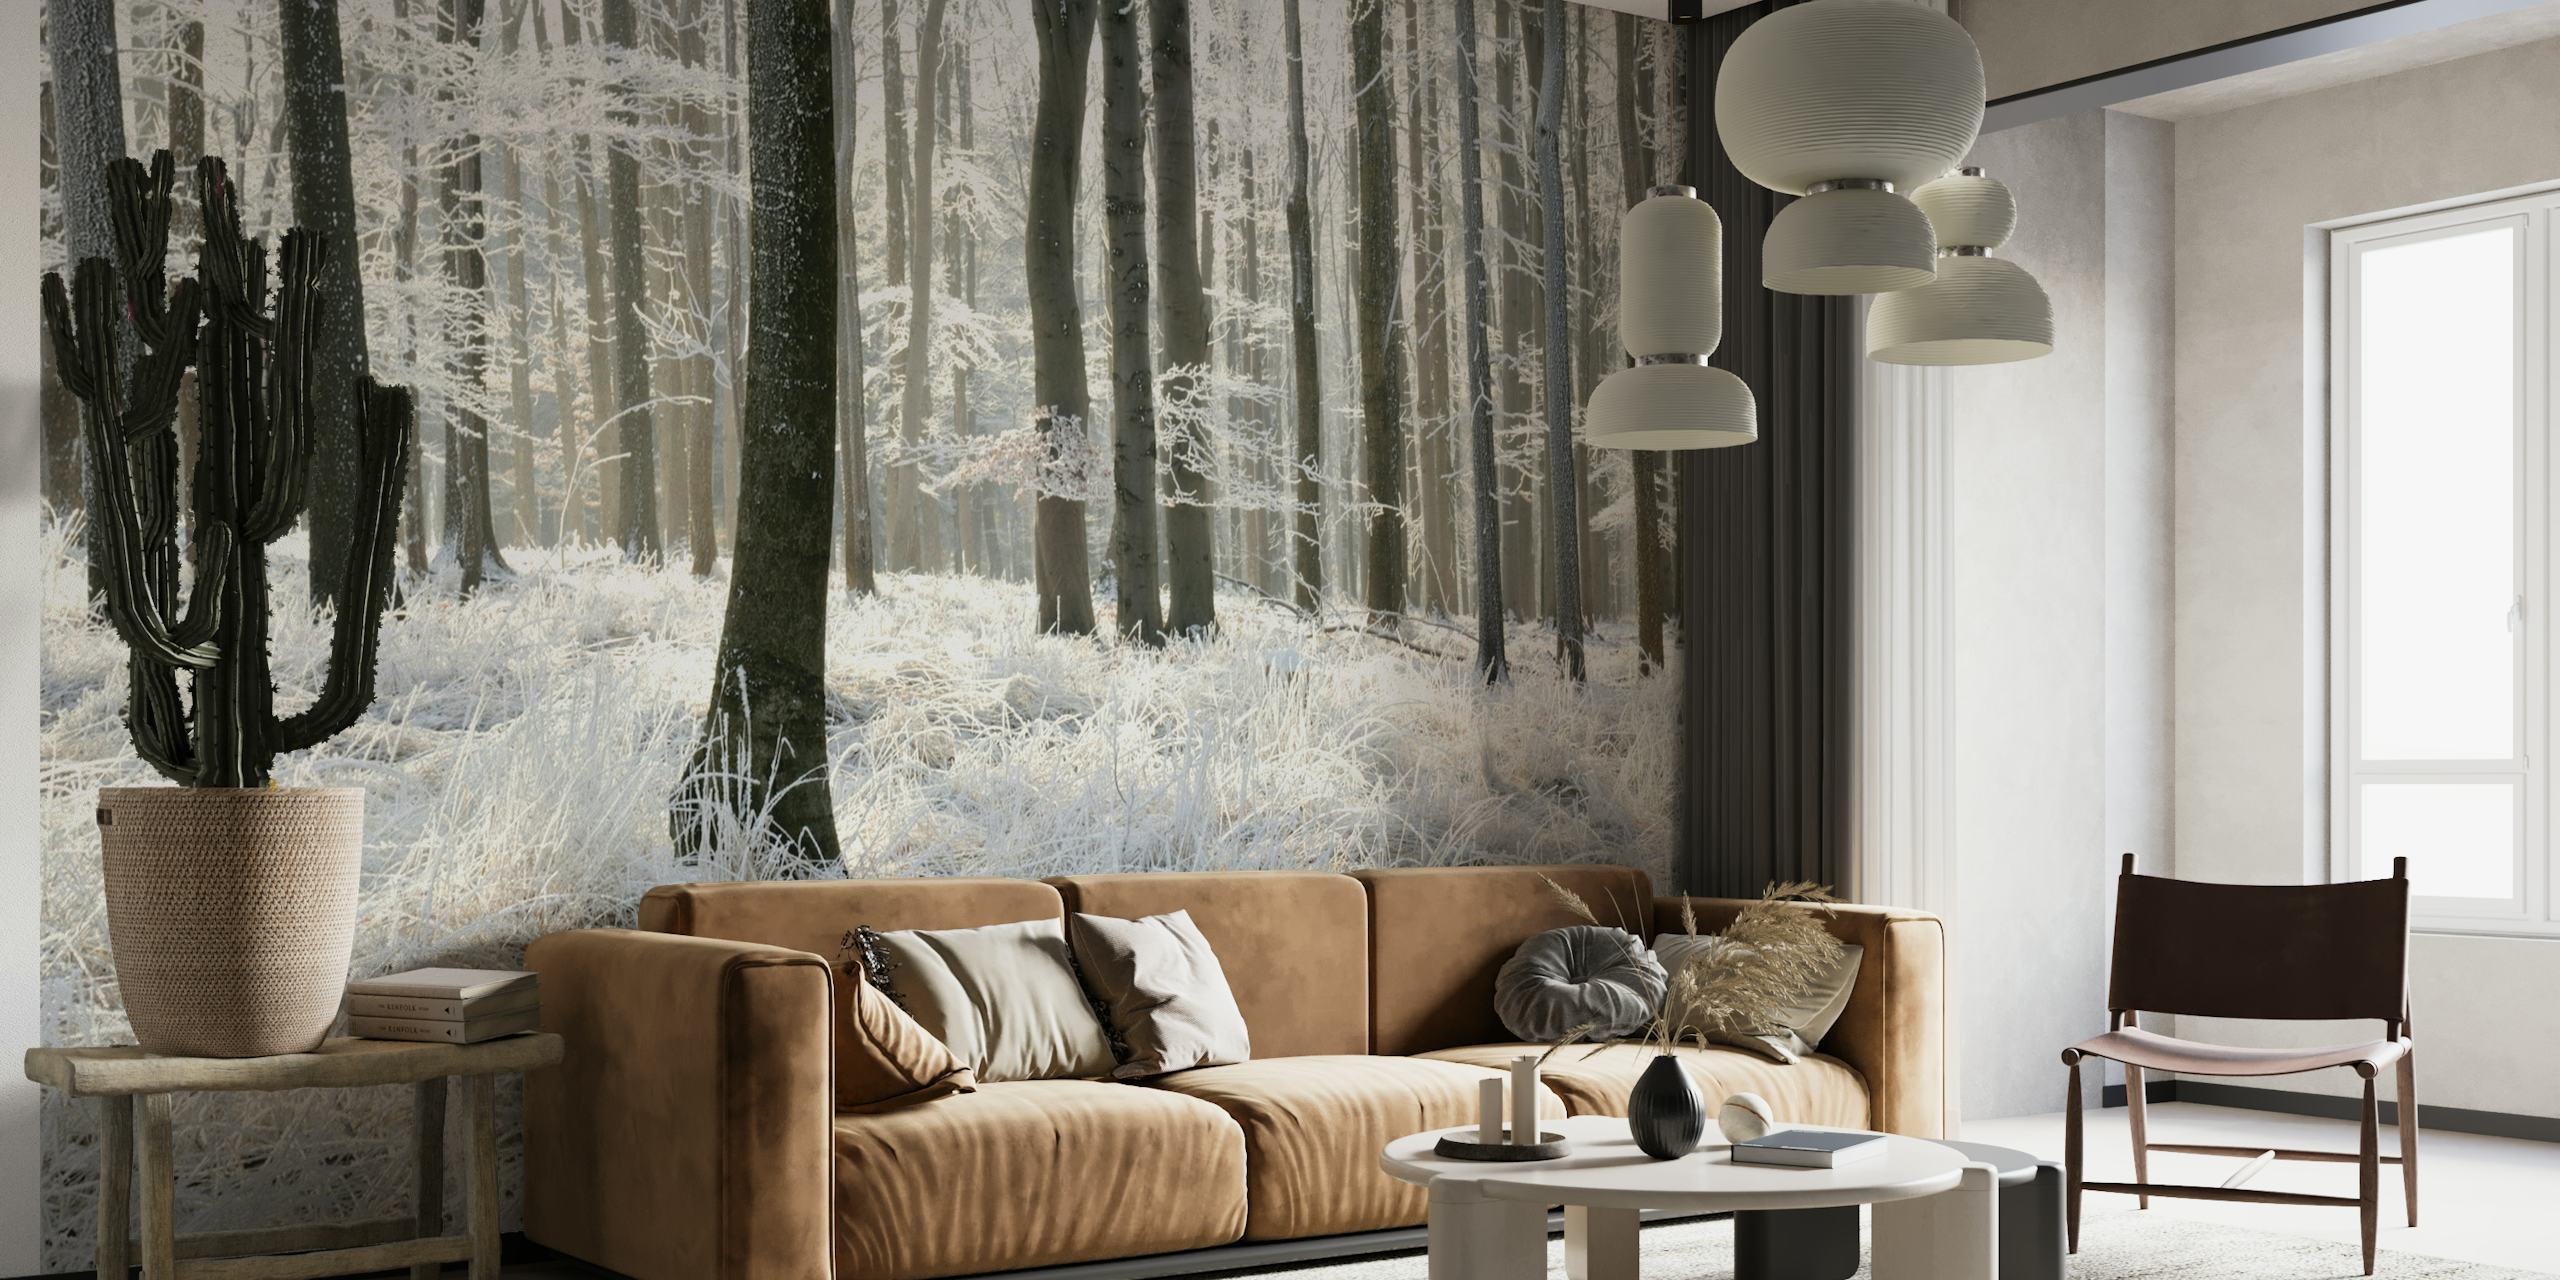 Winter forest papel pintado